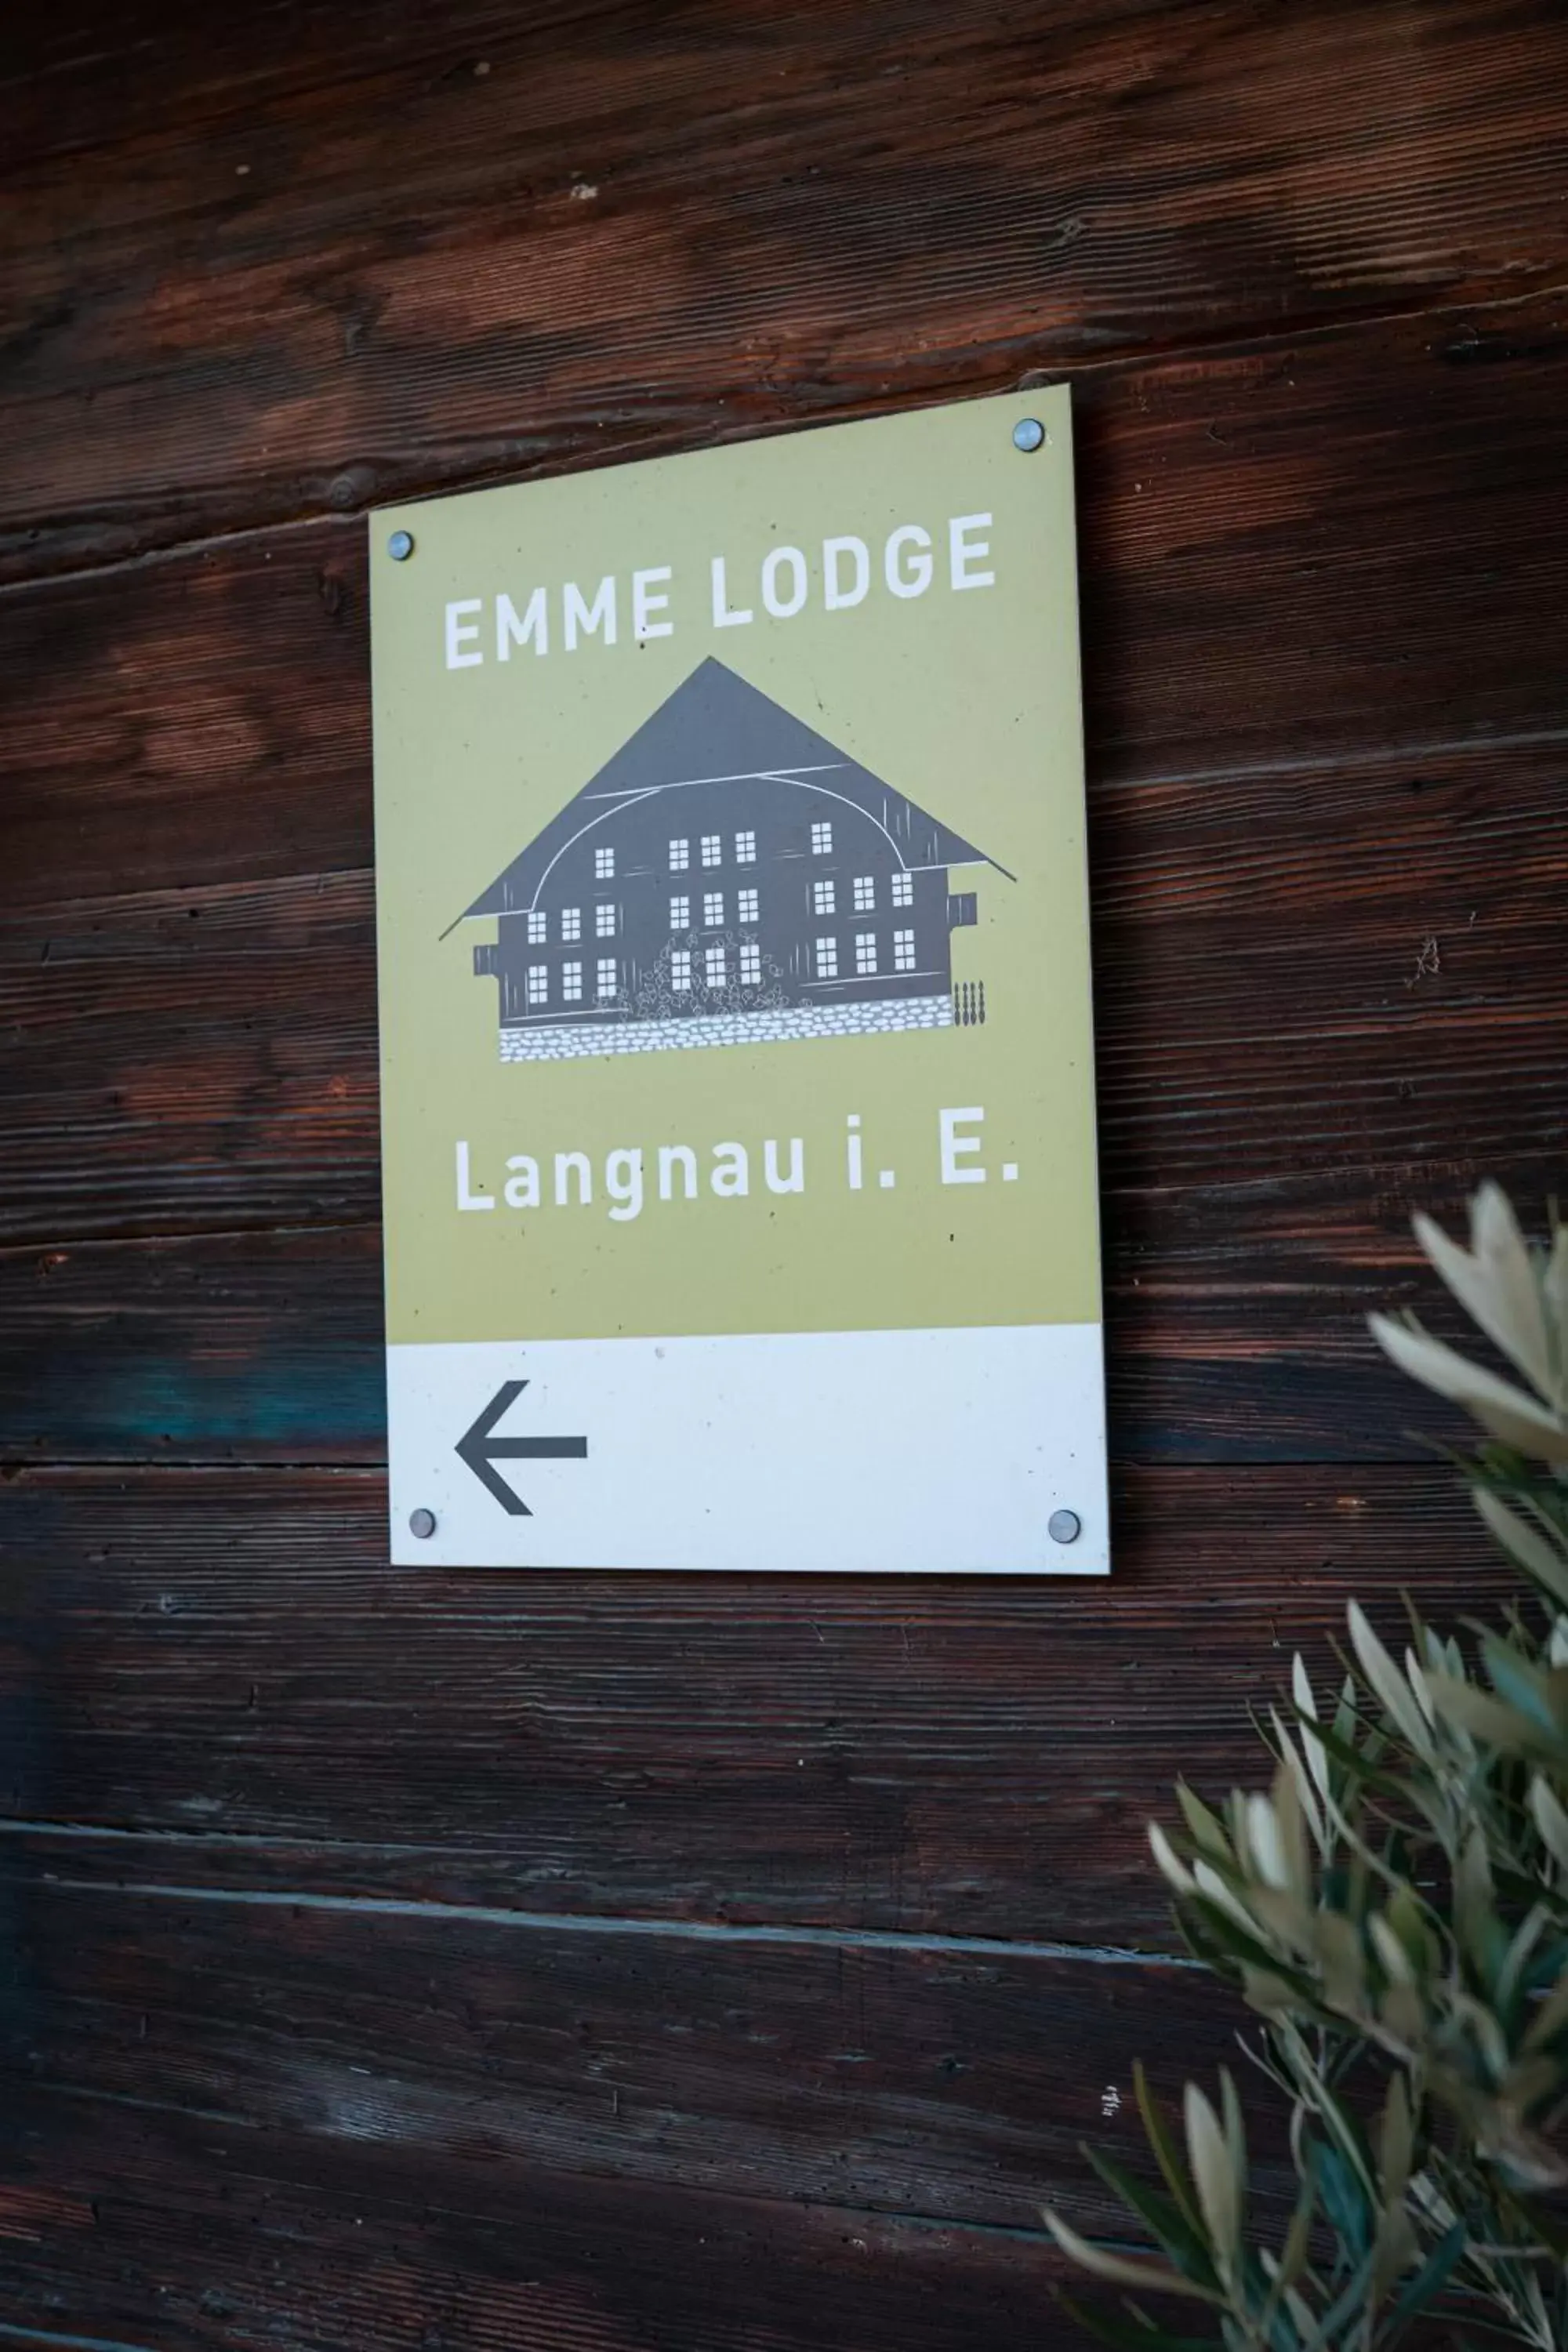 Property logo or sign in Emme Lodge